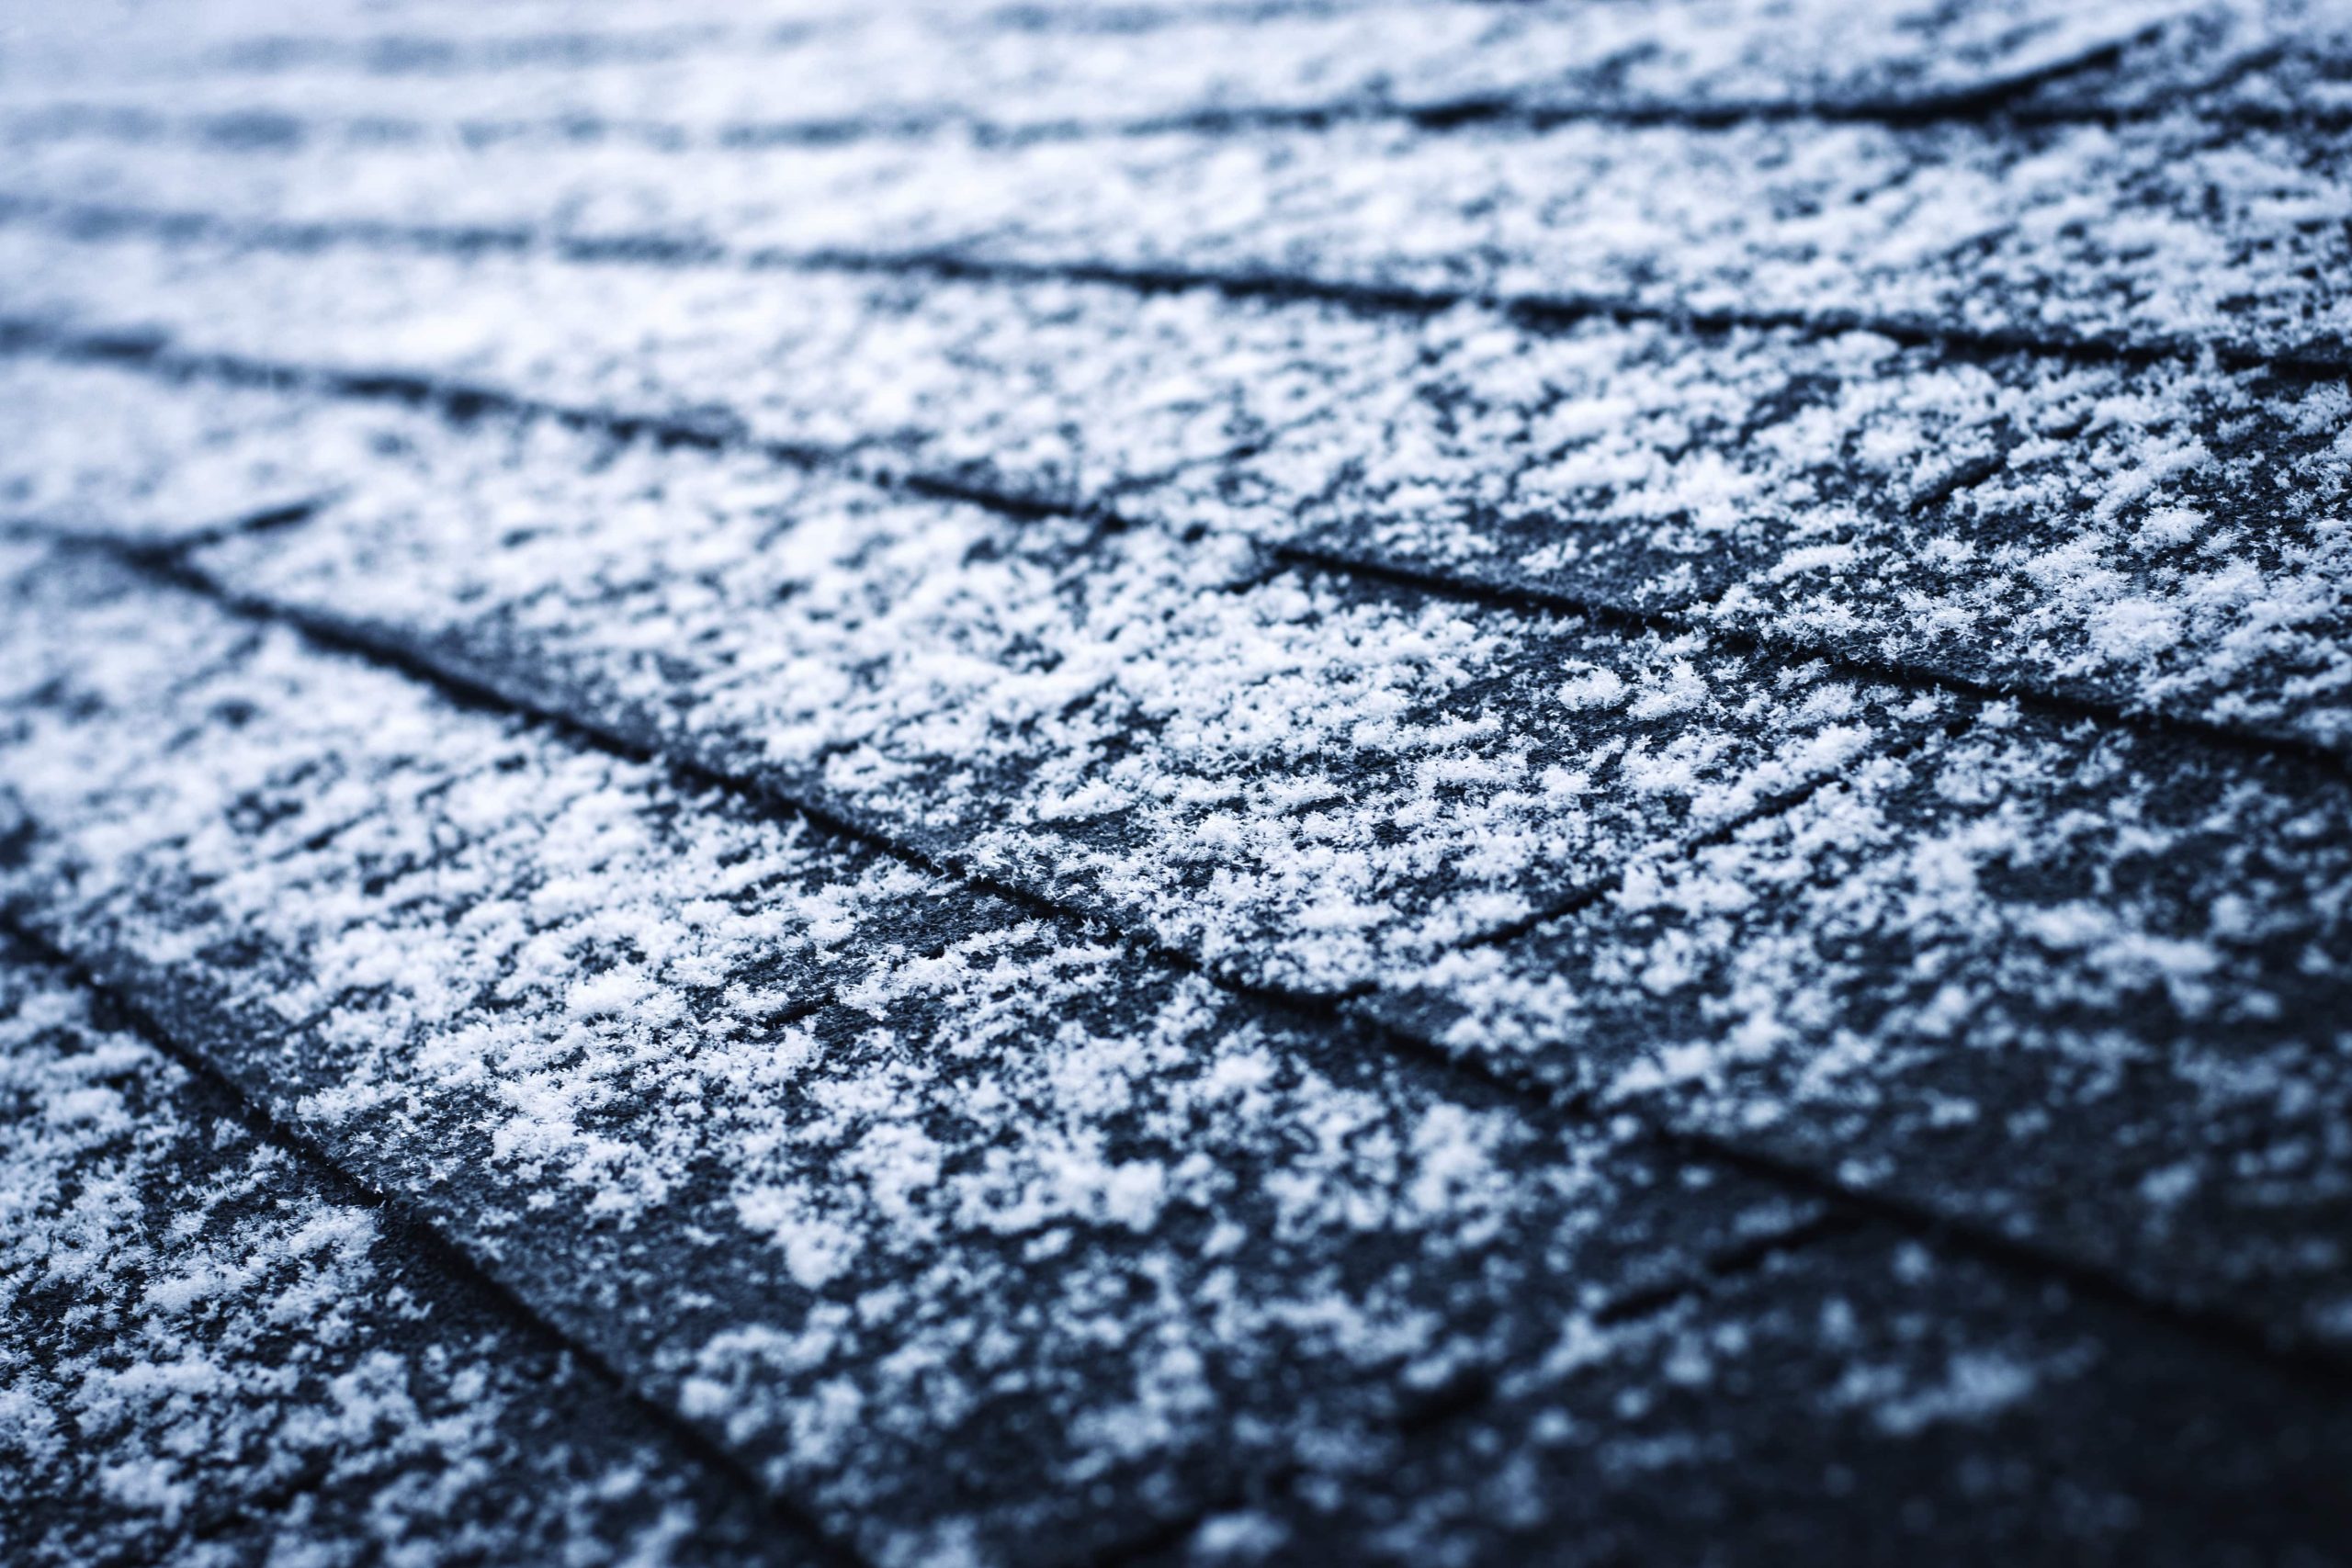 asphalt shingles with snow